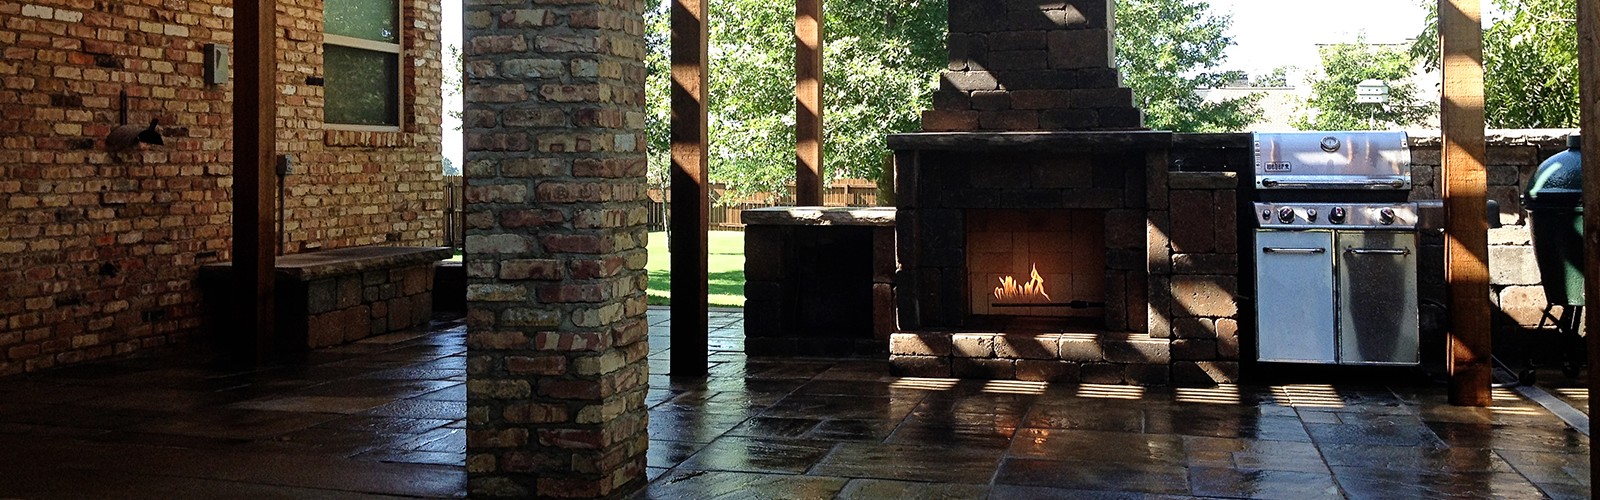 Fireplace Pergola Outdoor Hardscape